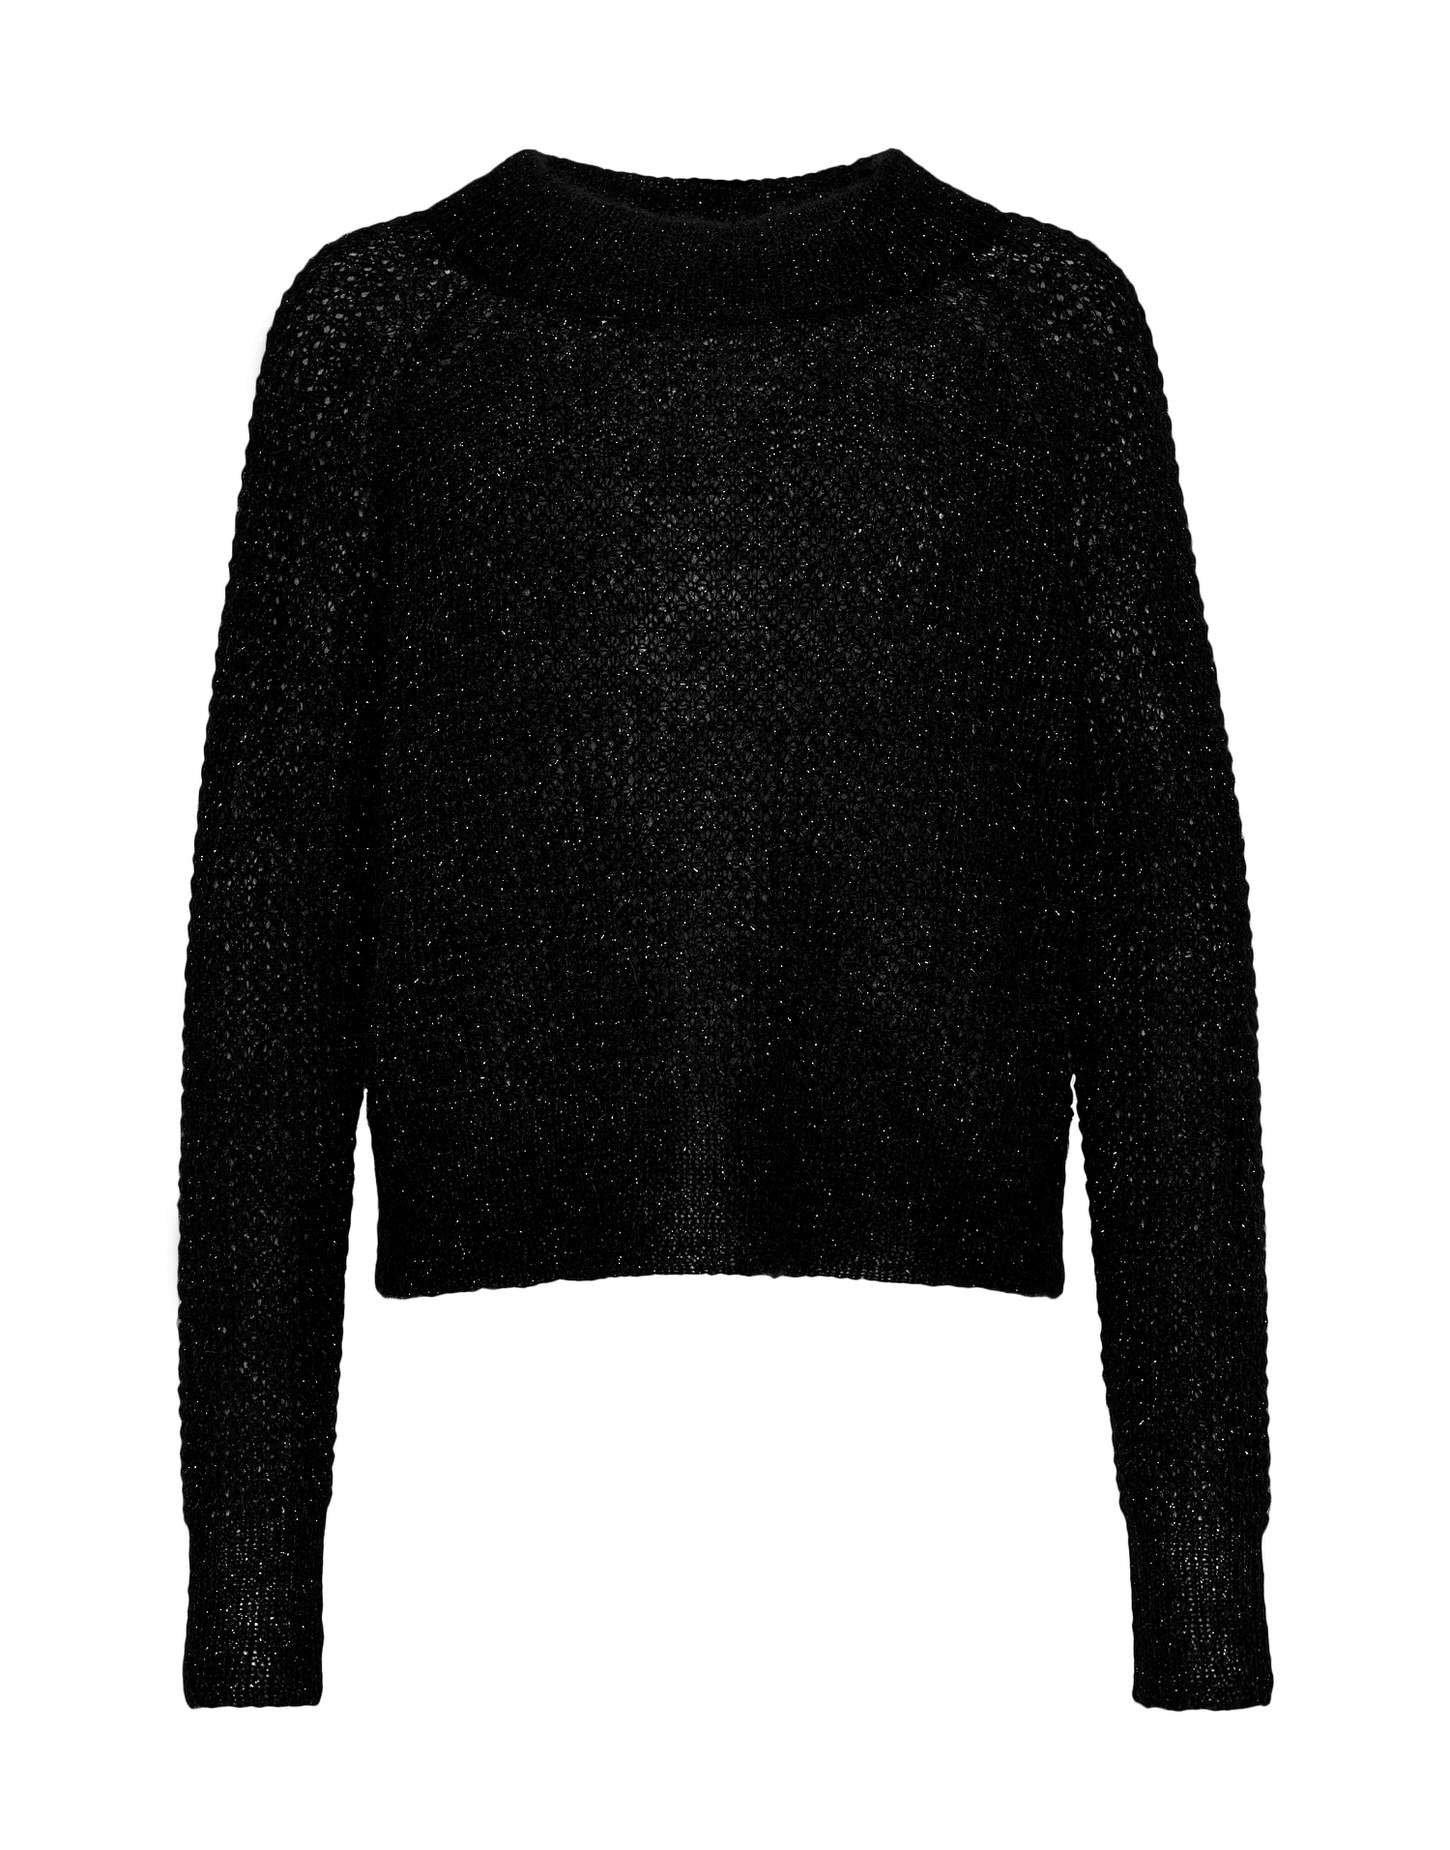 wollen jumper Ponar black by OPUS | shop your favourites online